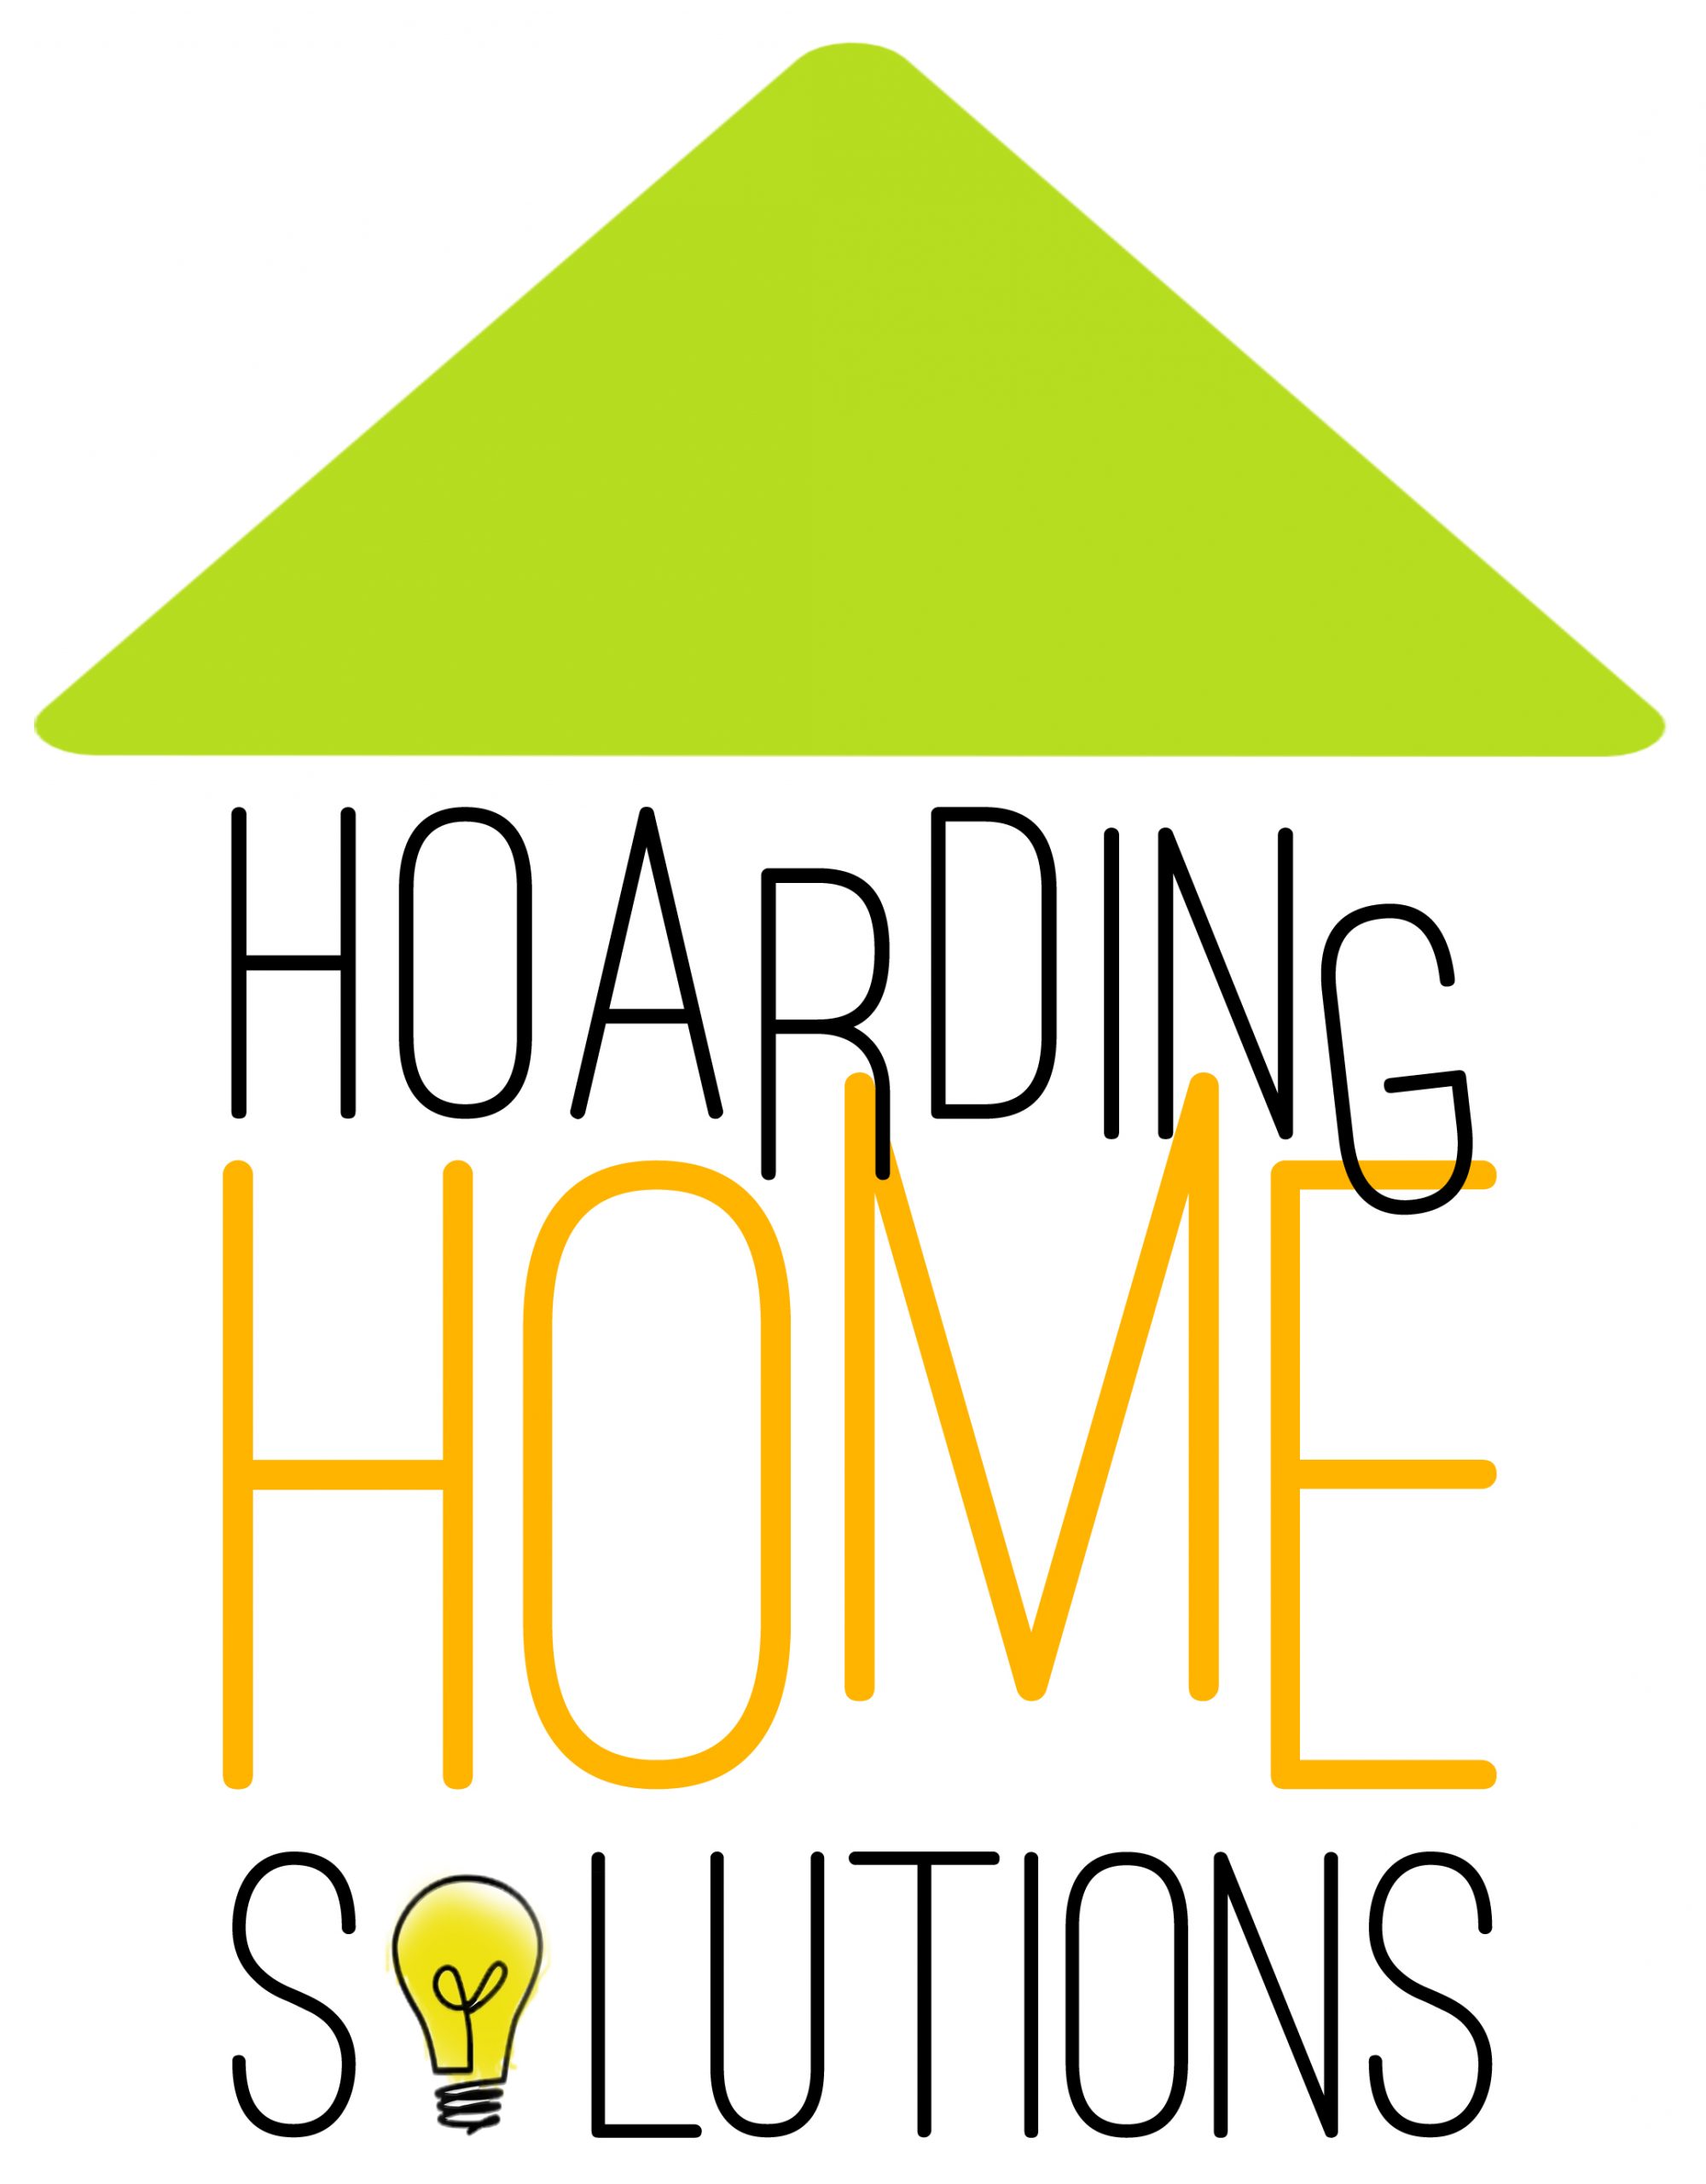 Hoarding Home Solutions logo